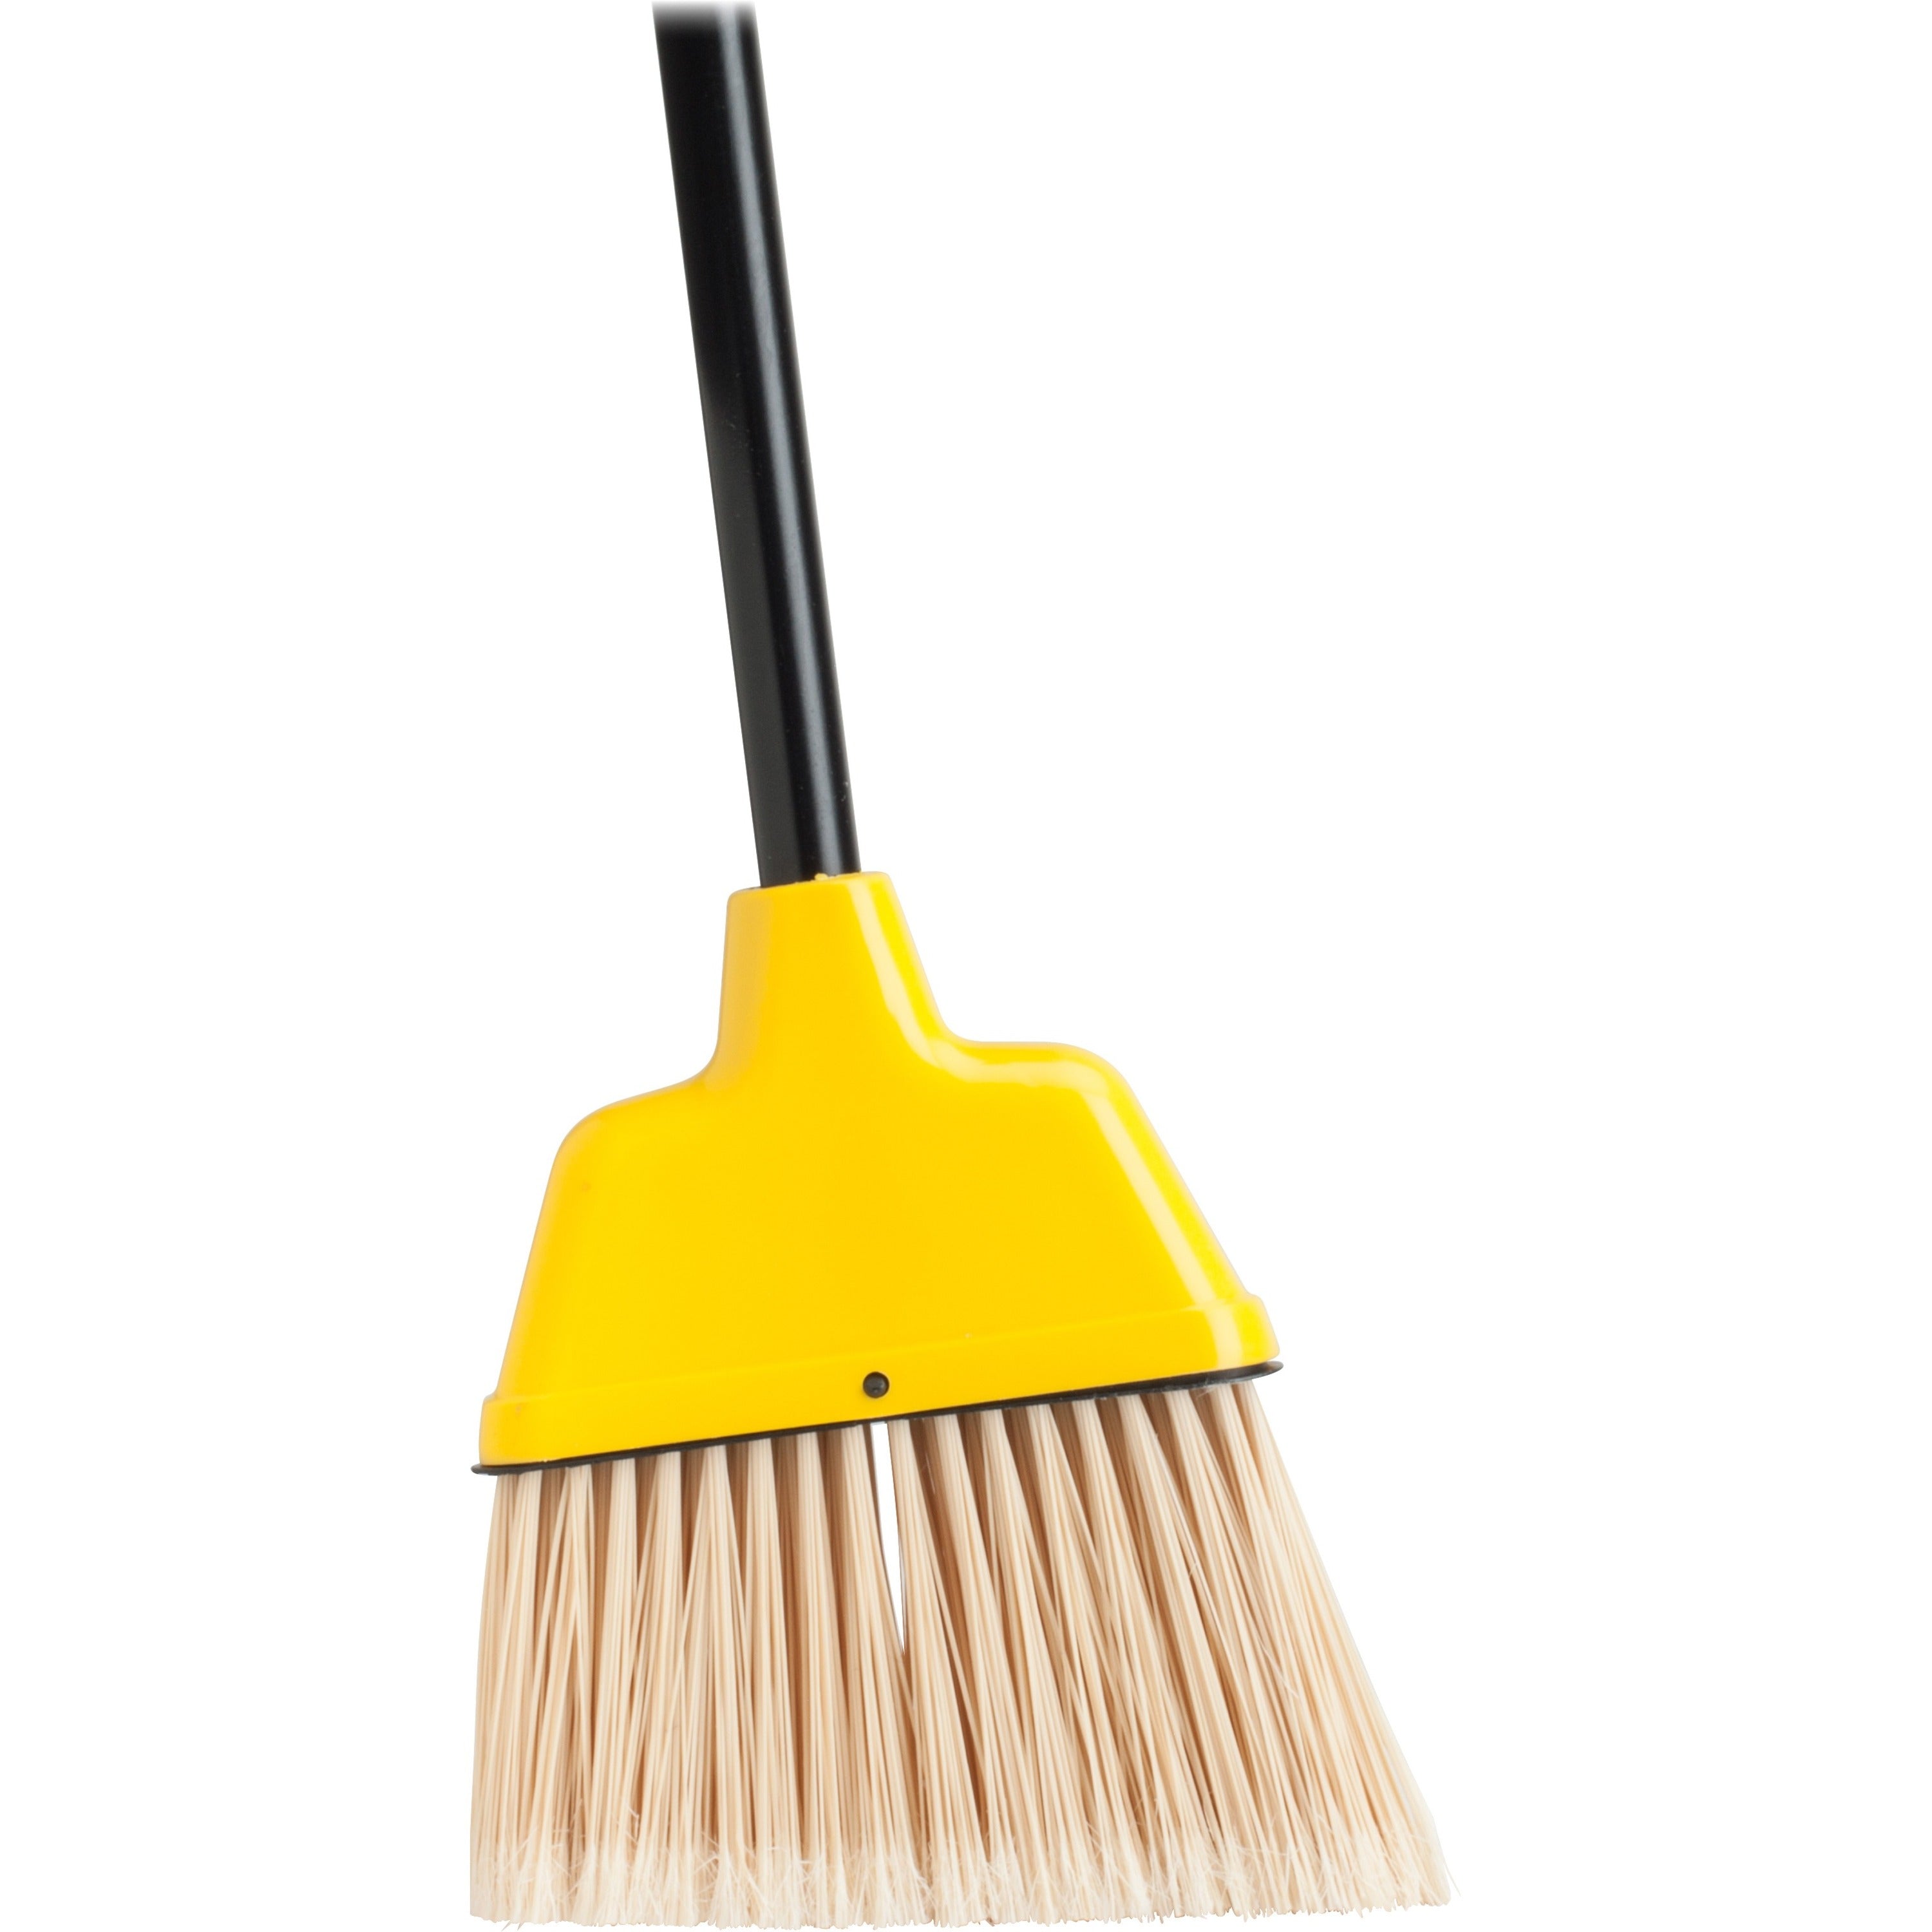 Genuine Joe Angle Broom - Polyvinyl Chloride (PVC) Bristle - 47" Handle Length - 54.5" Overall Length - Plastic Handle - 1 Each - Yellow - 